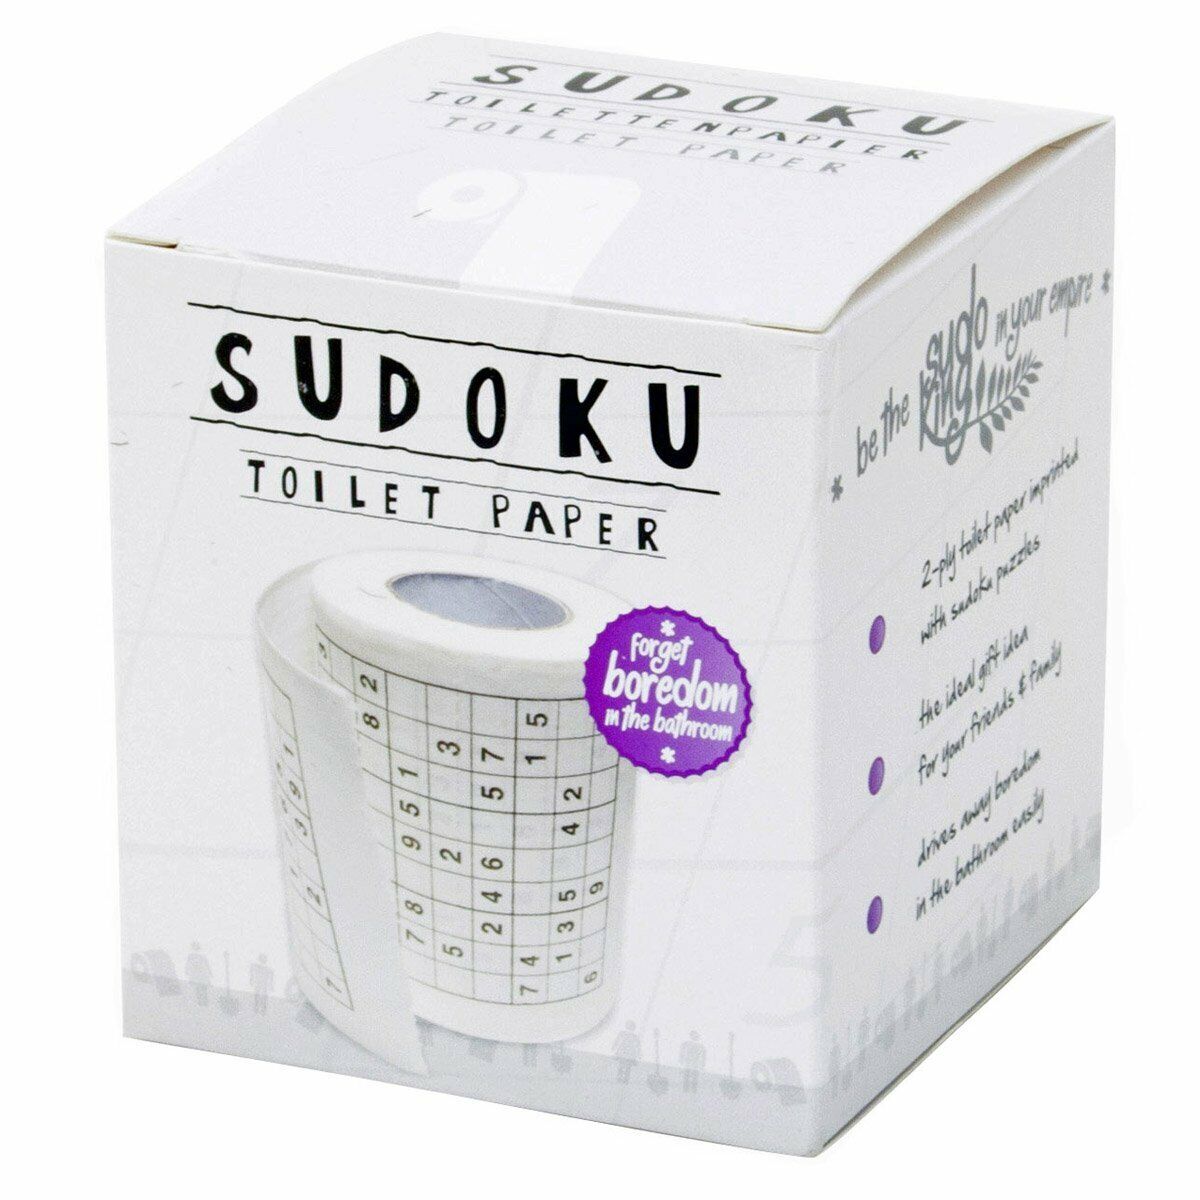 Sudoku Klopapier Sodoku Sudoko Toilettenpapier in Geschenkbox vom Hersteller